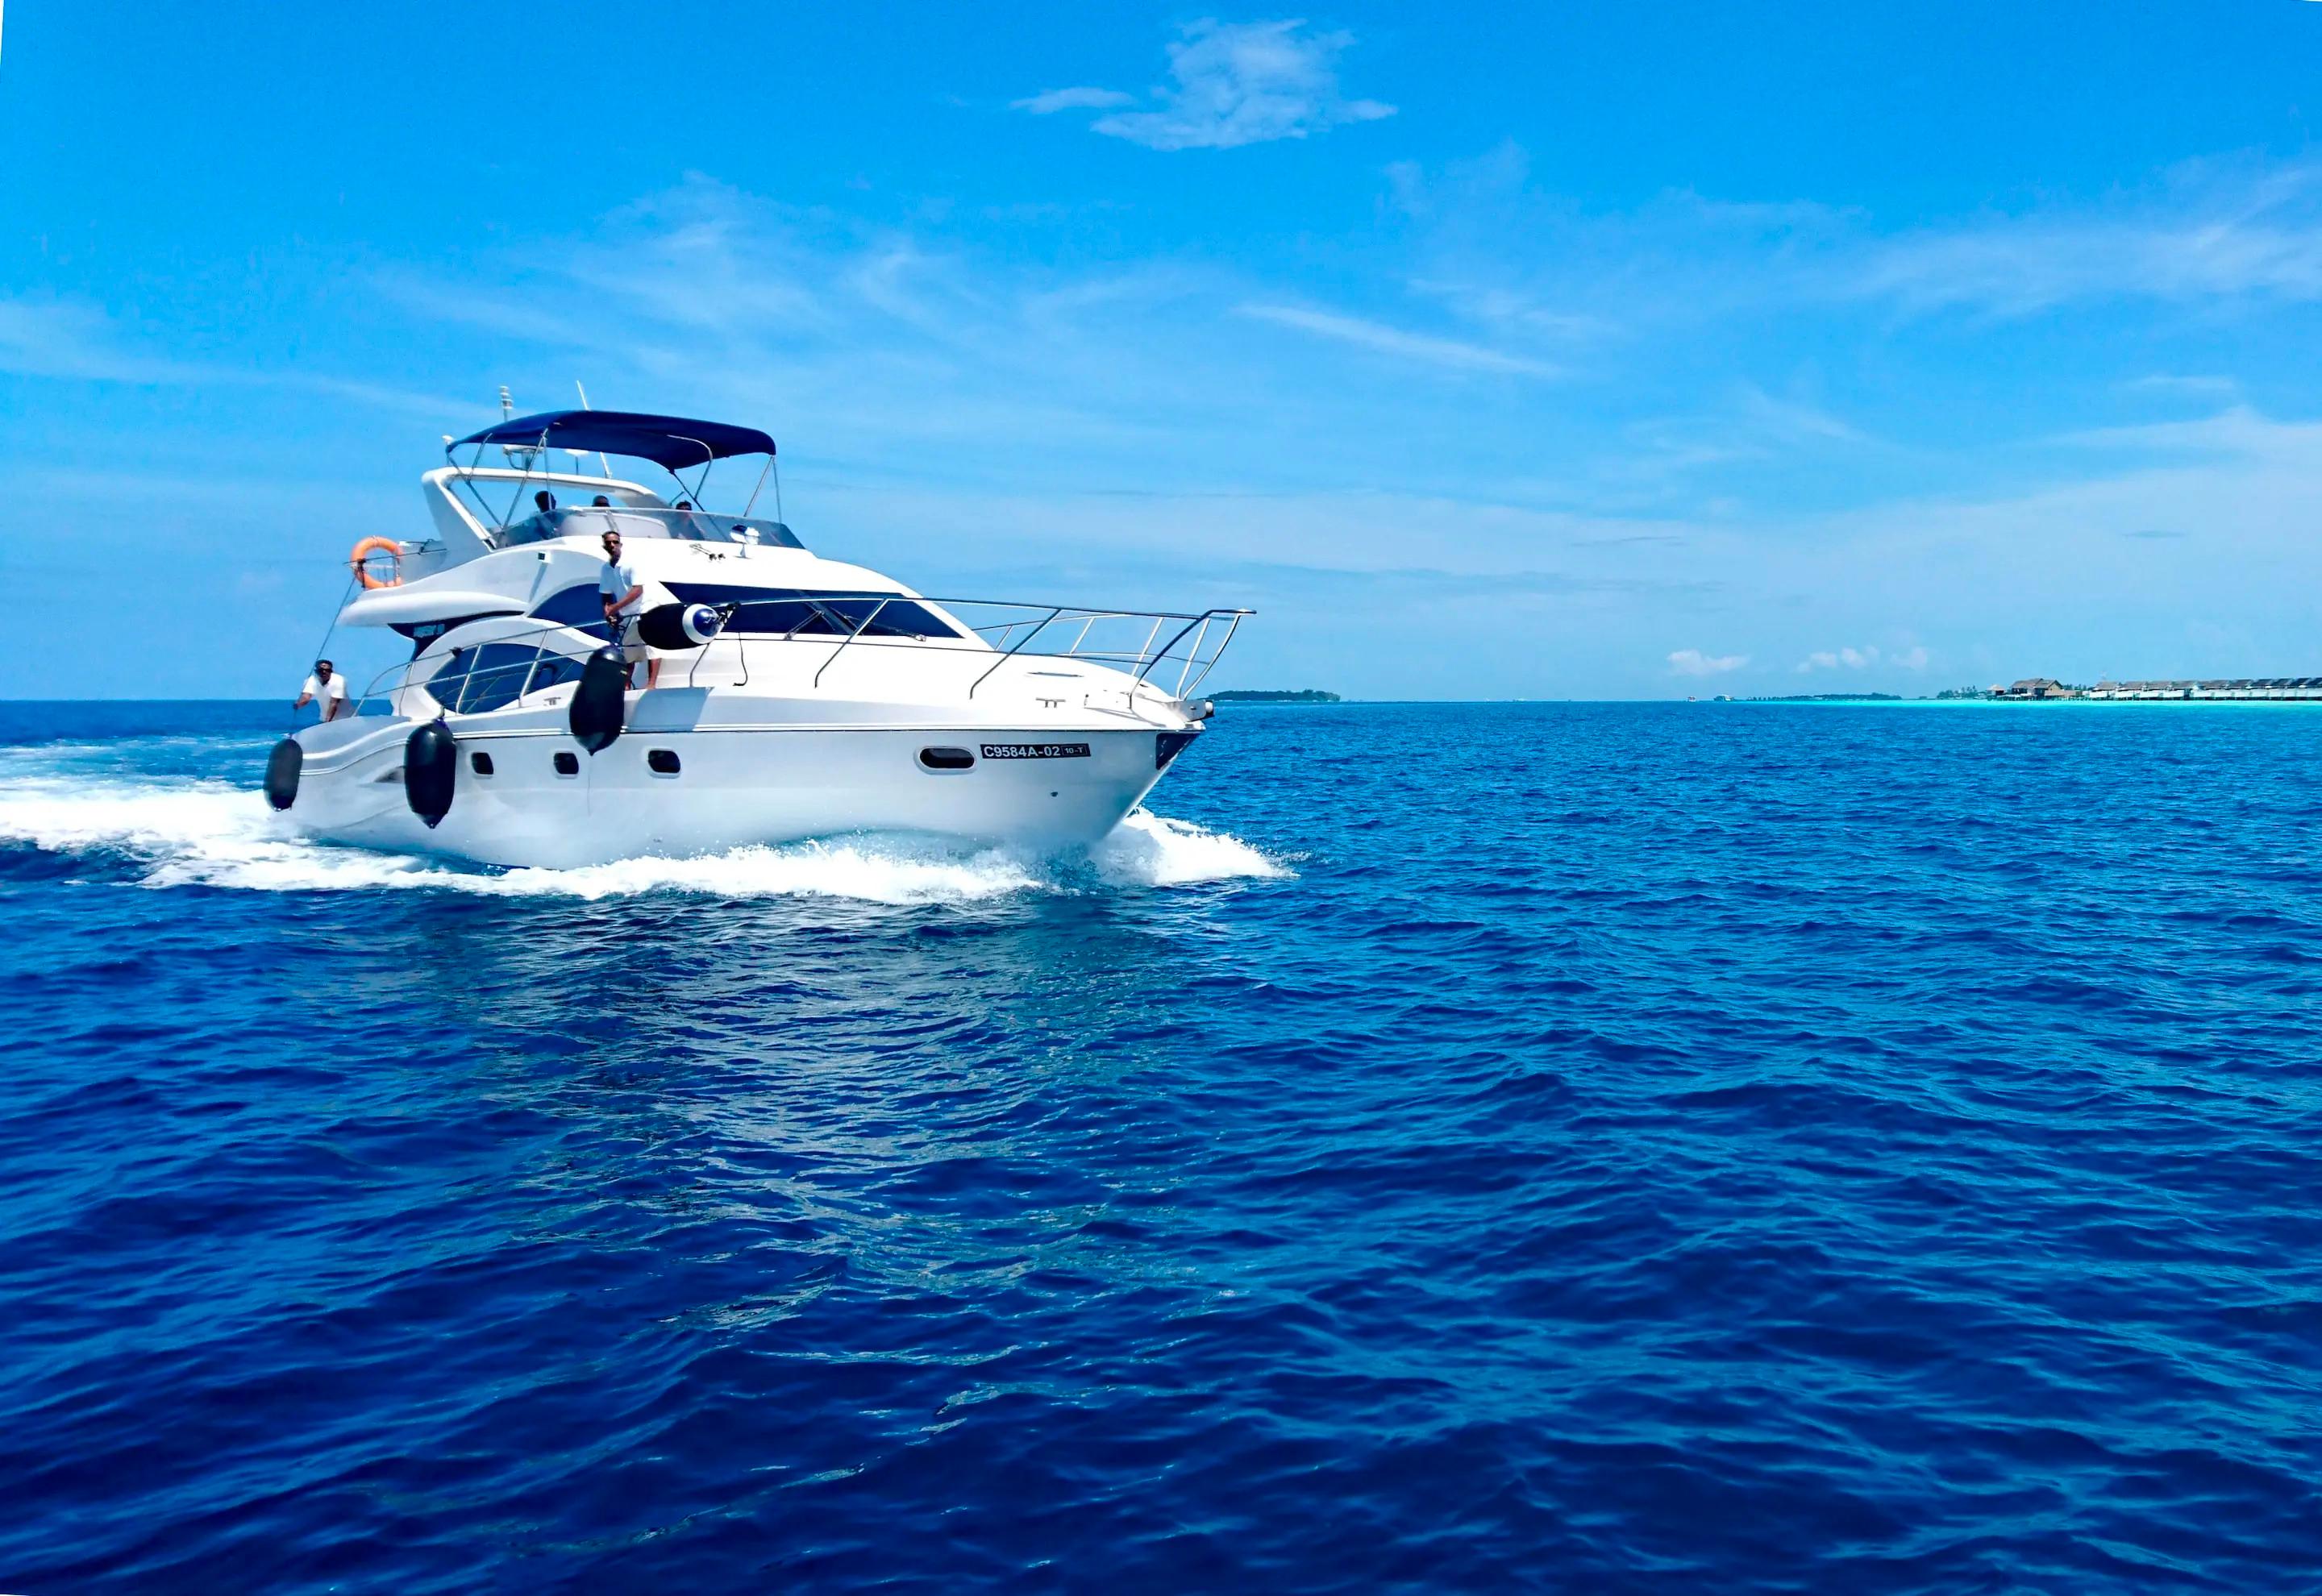 Find the best Miami boat rentals